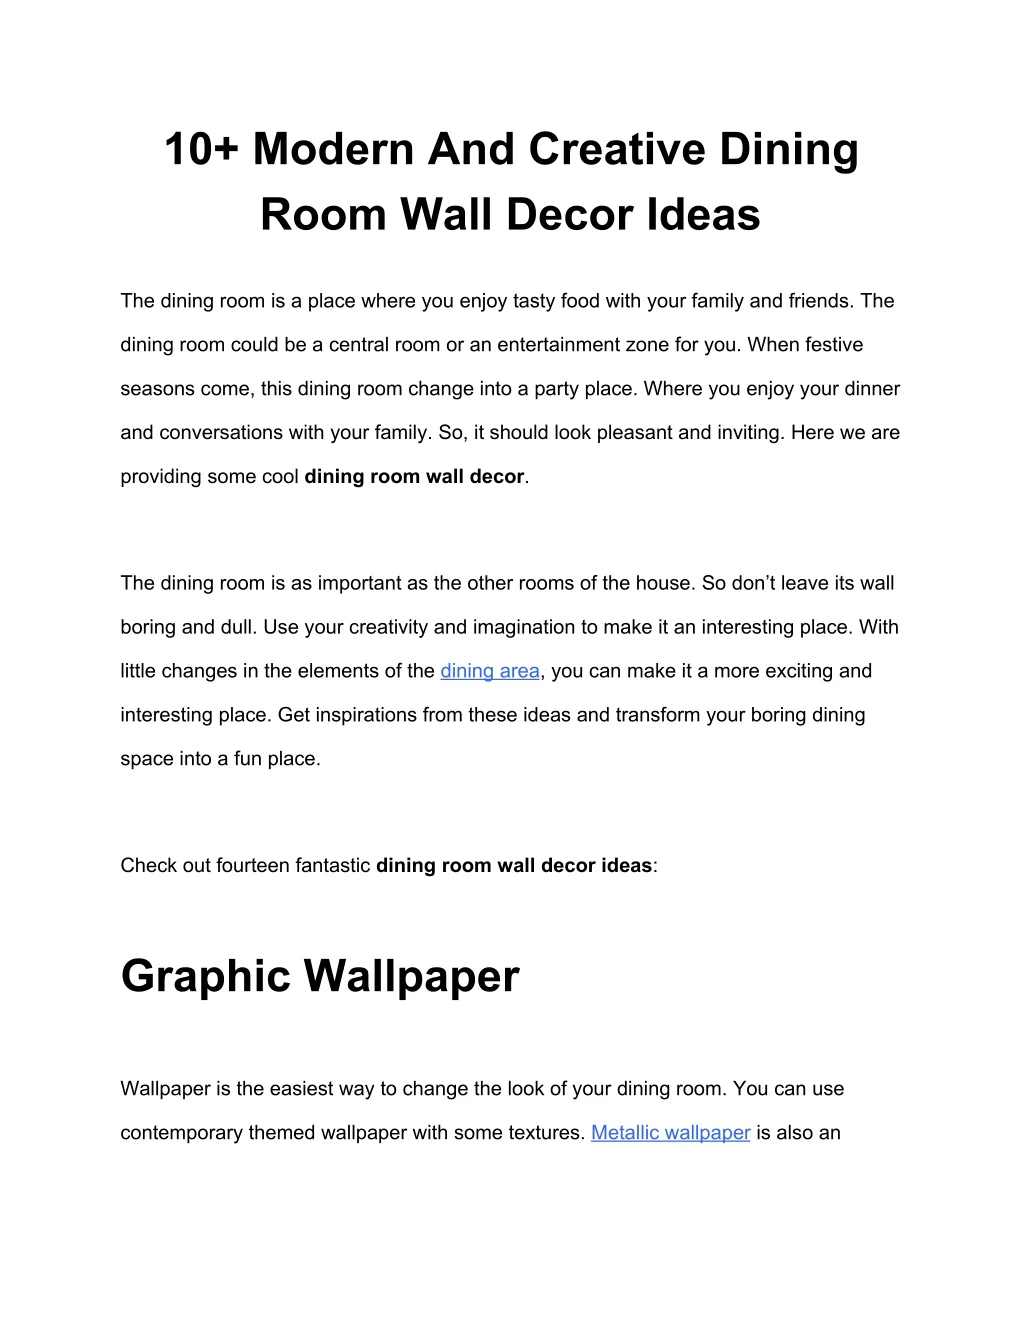 10 modern and creative dining room wall decor